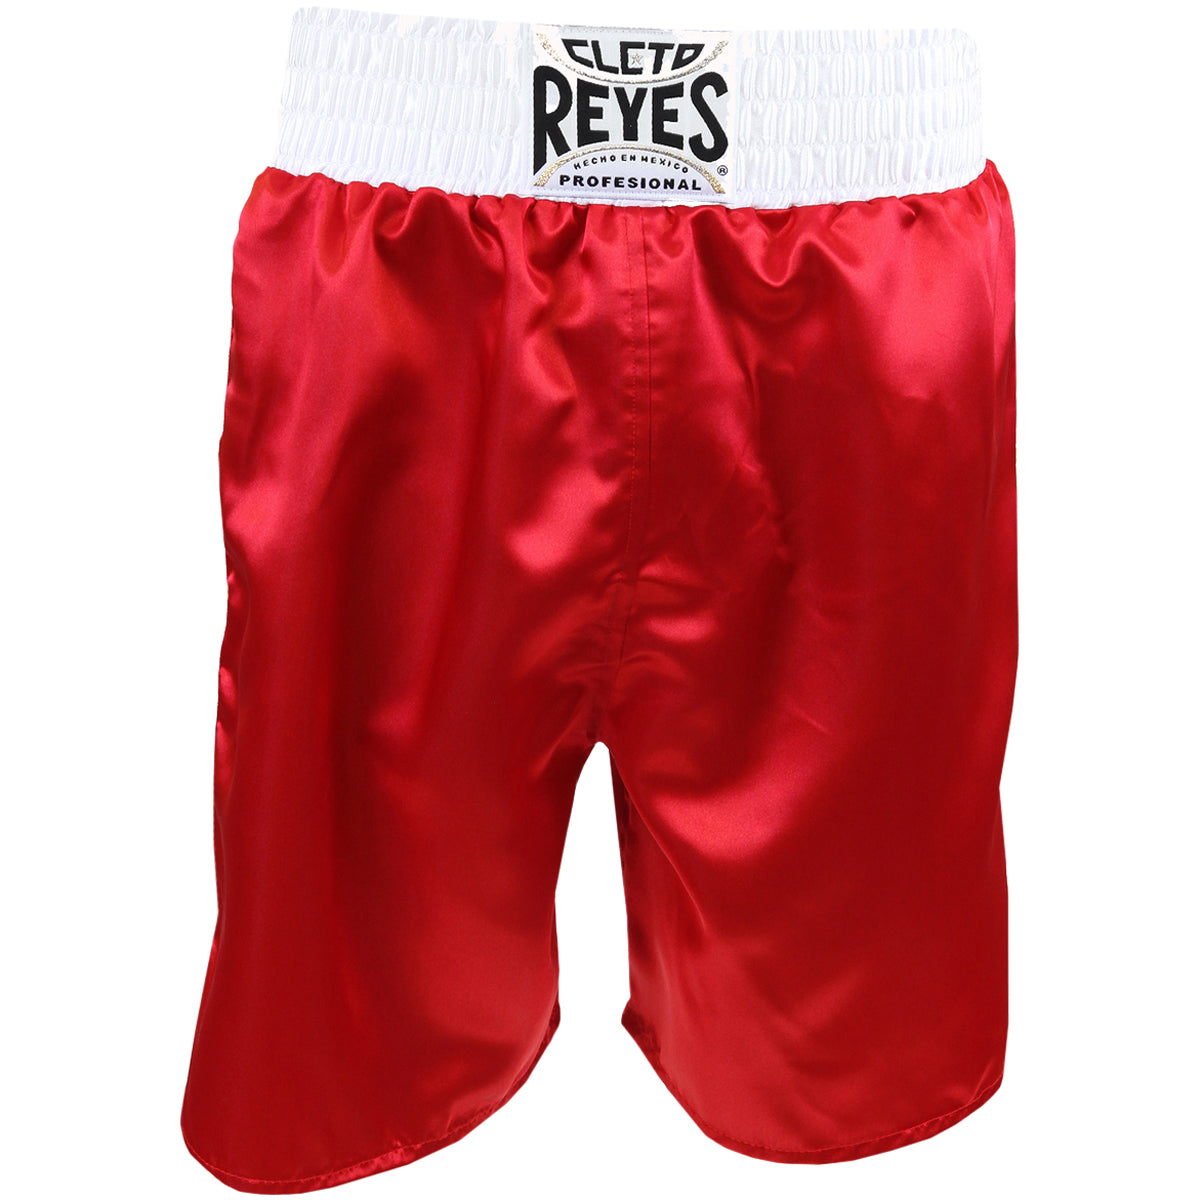 Cleto Reyes Satin Classic Boxing Trunks - Medium (36") - Red/White Cleto Reyes